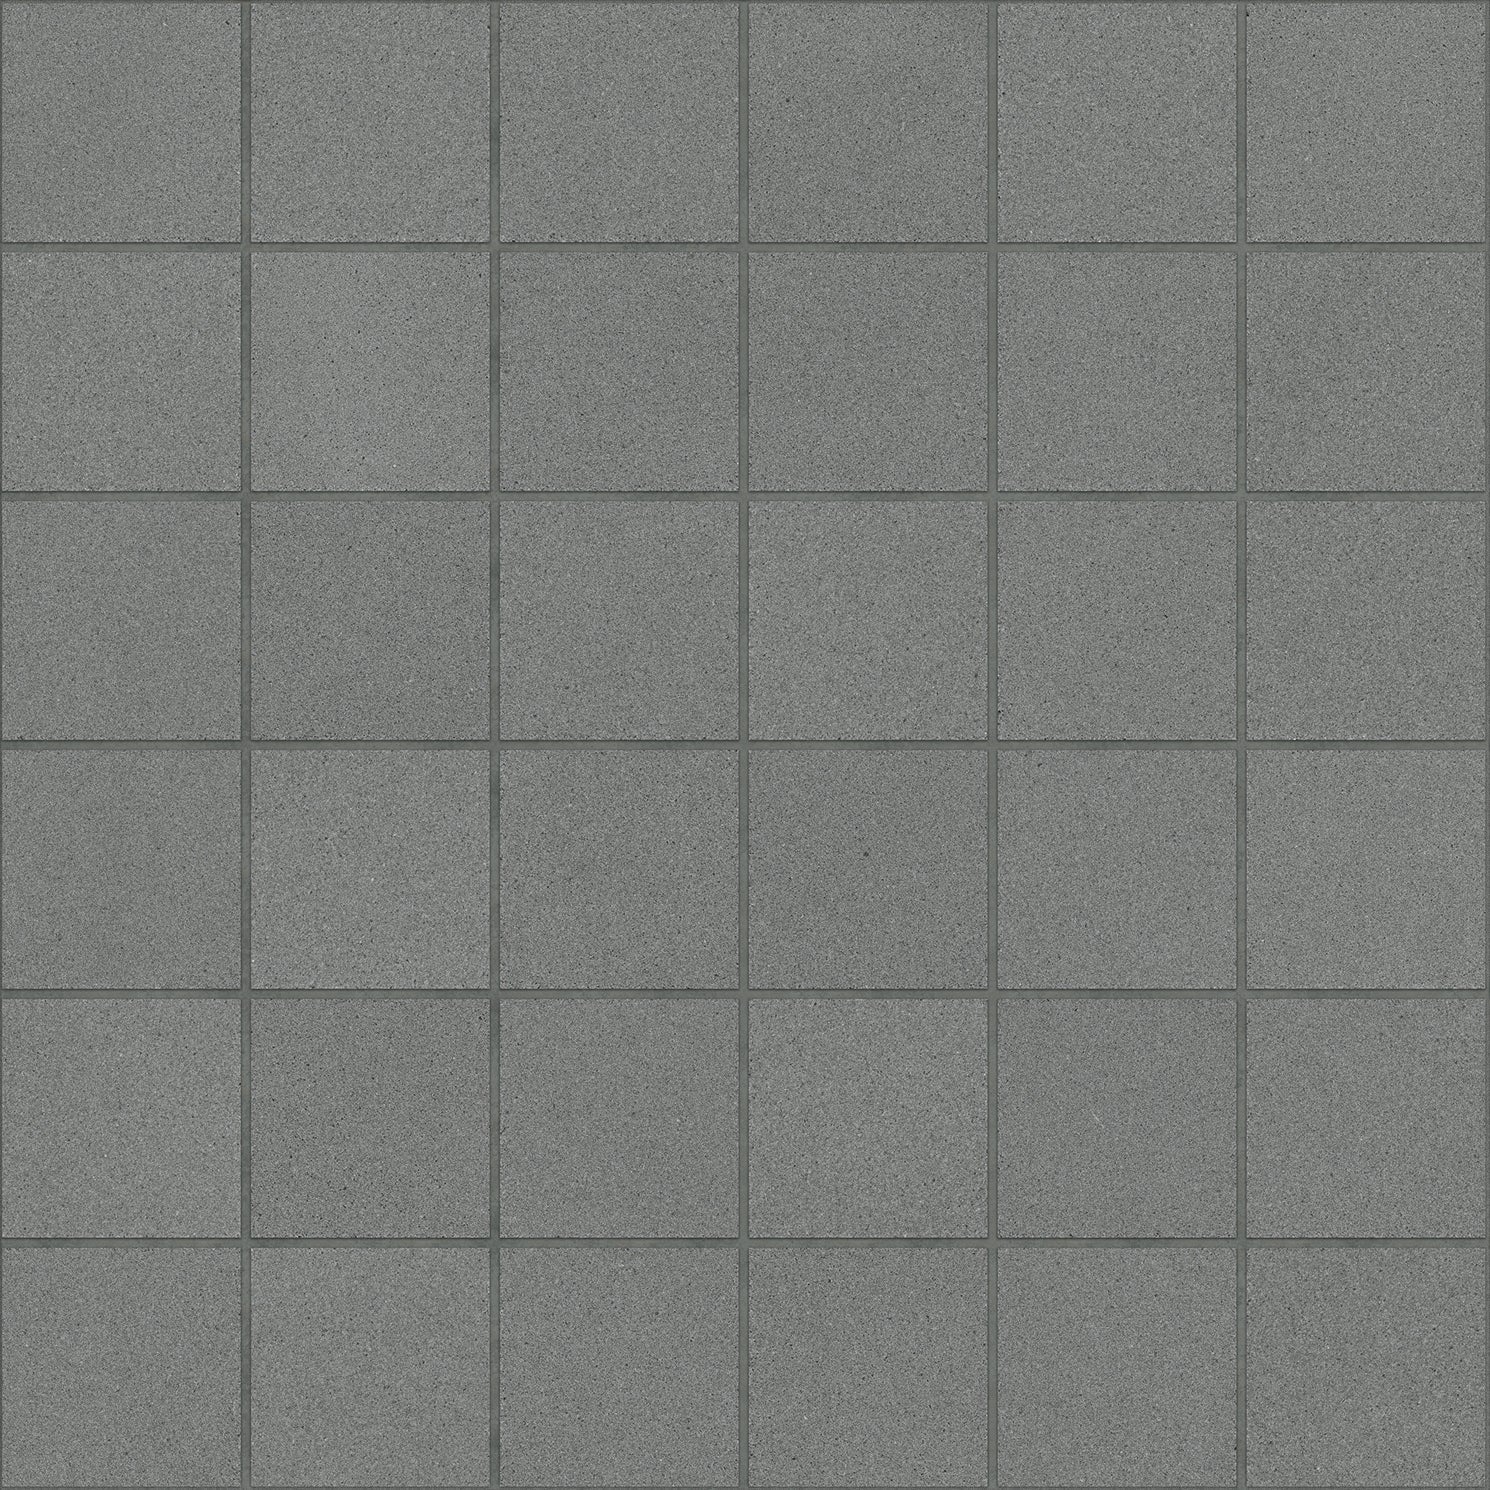 landmark 9mm masterplan fashion black straight stack 2x2 mosaic 12x12x9mm matte rectified porcelain tile distributed by surface group international